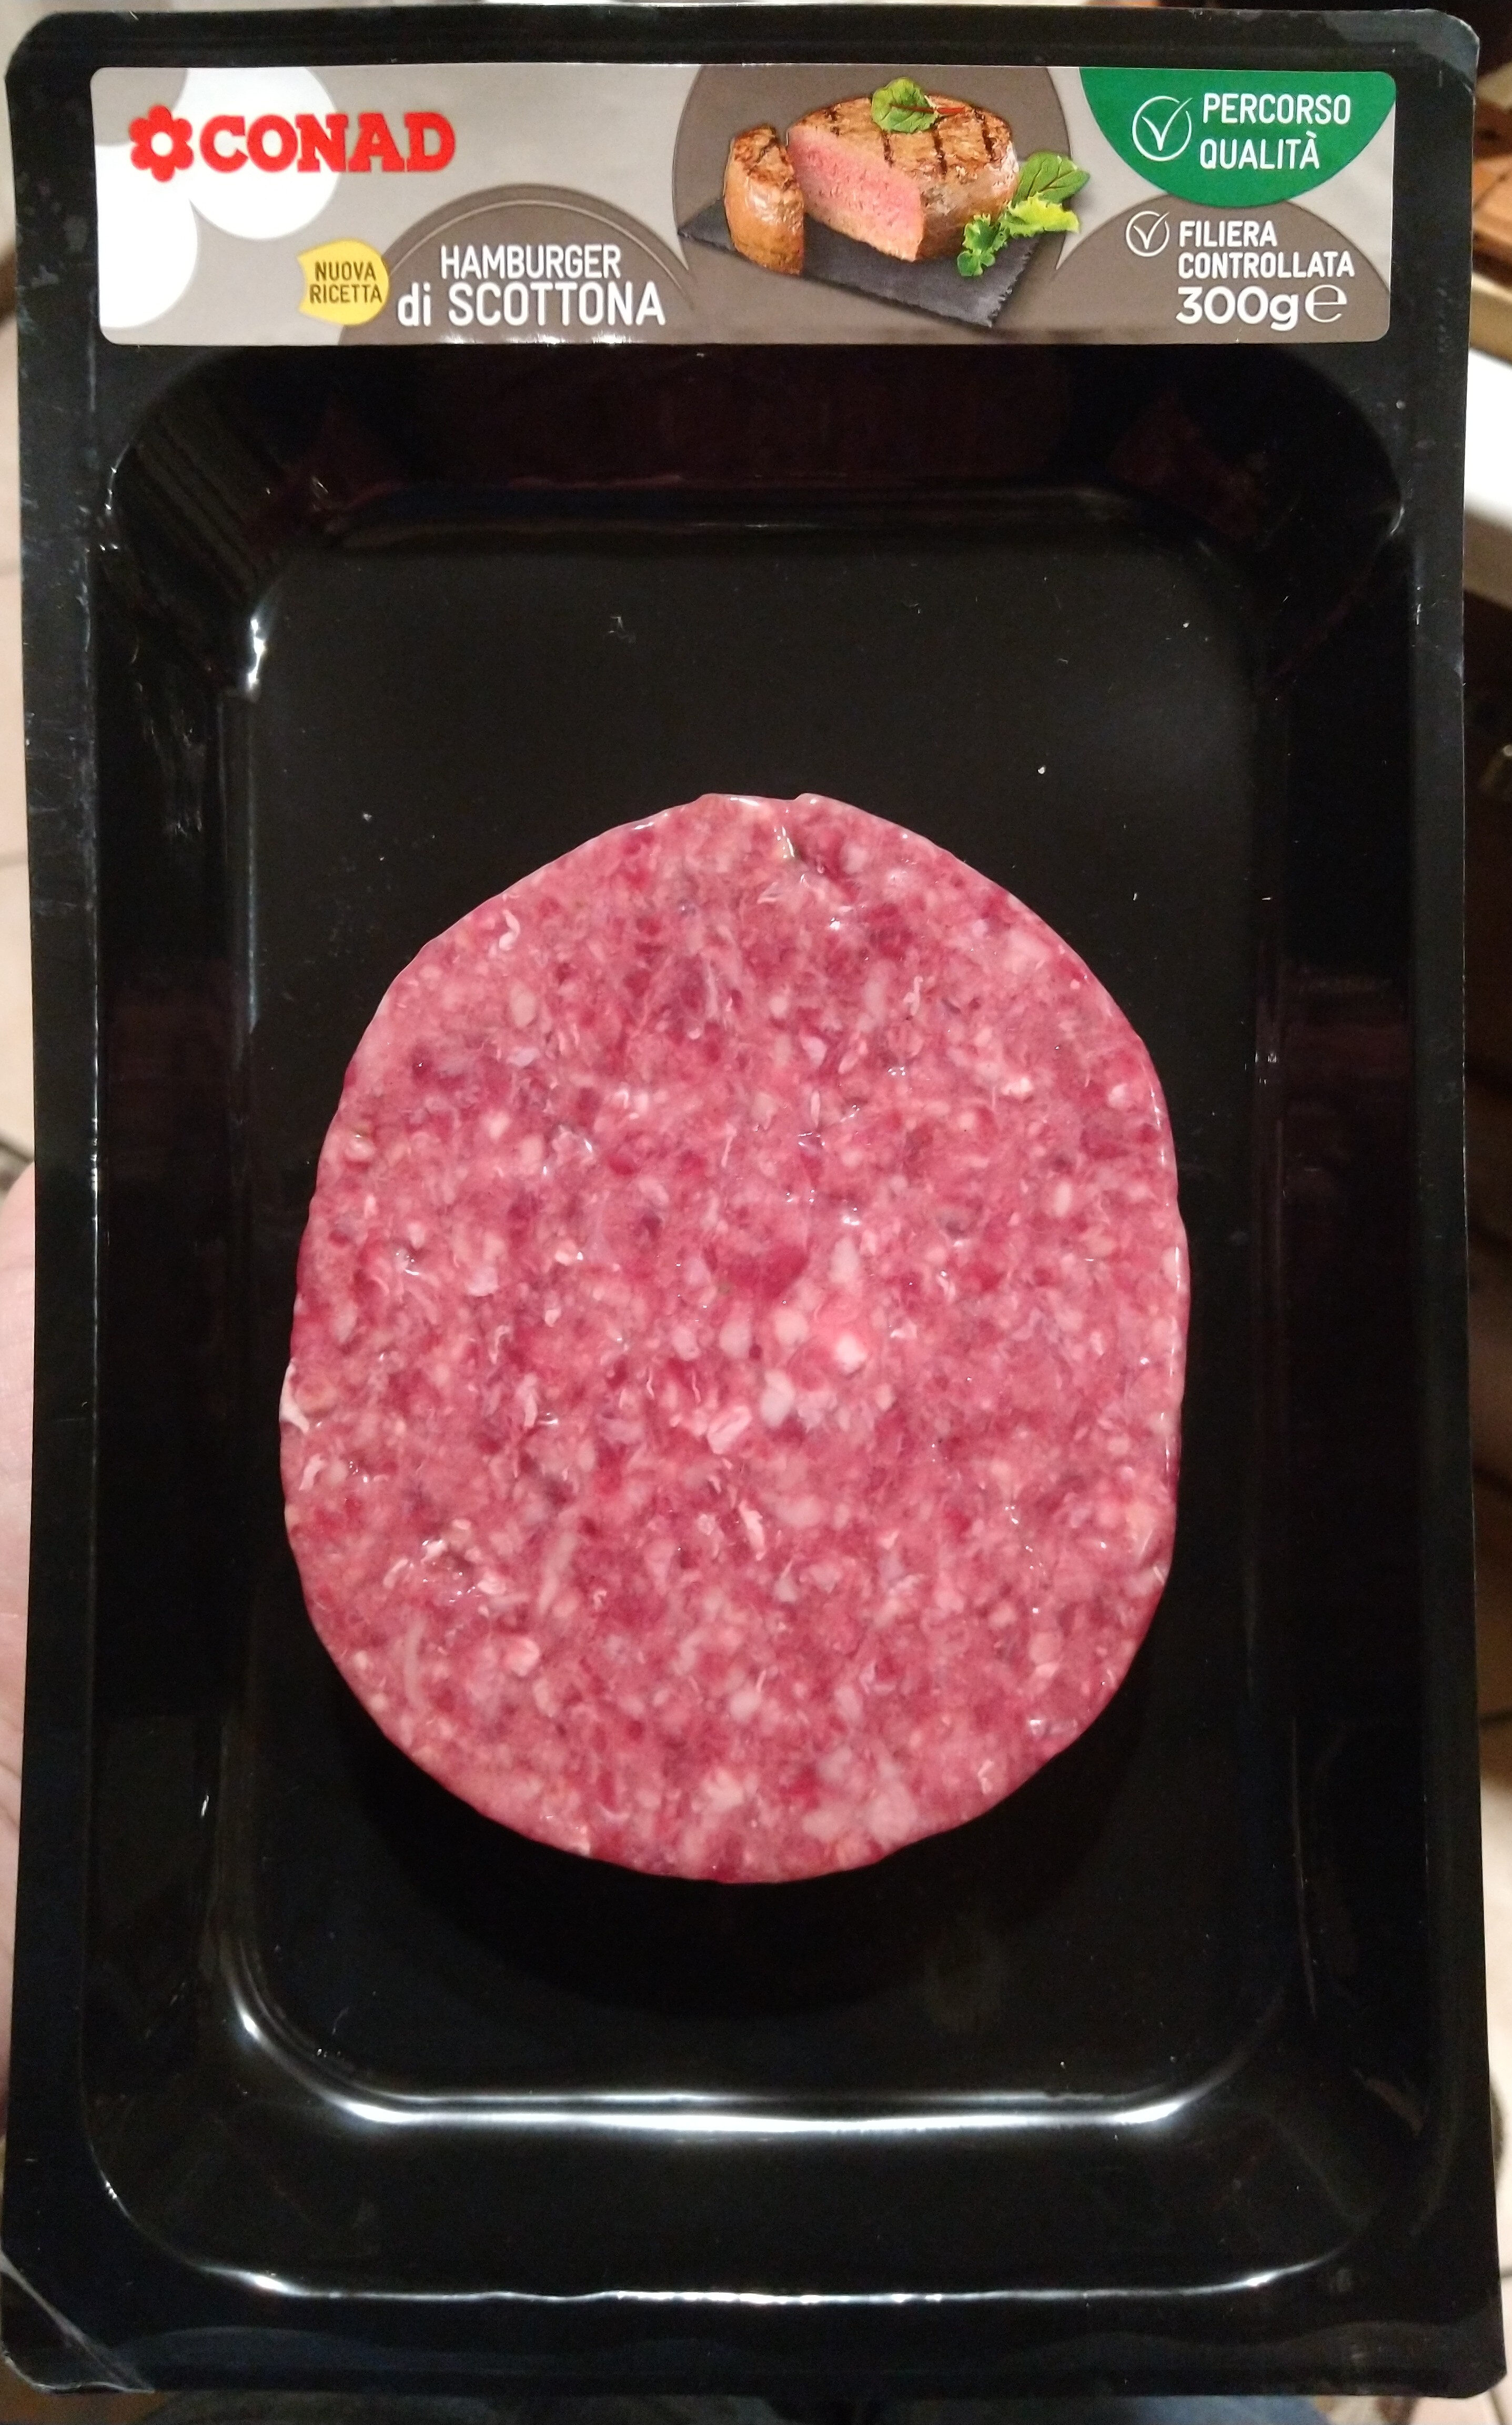 hamburger di scottona - Product - it